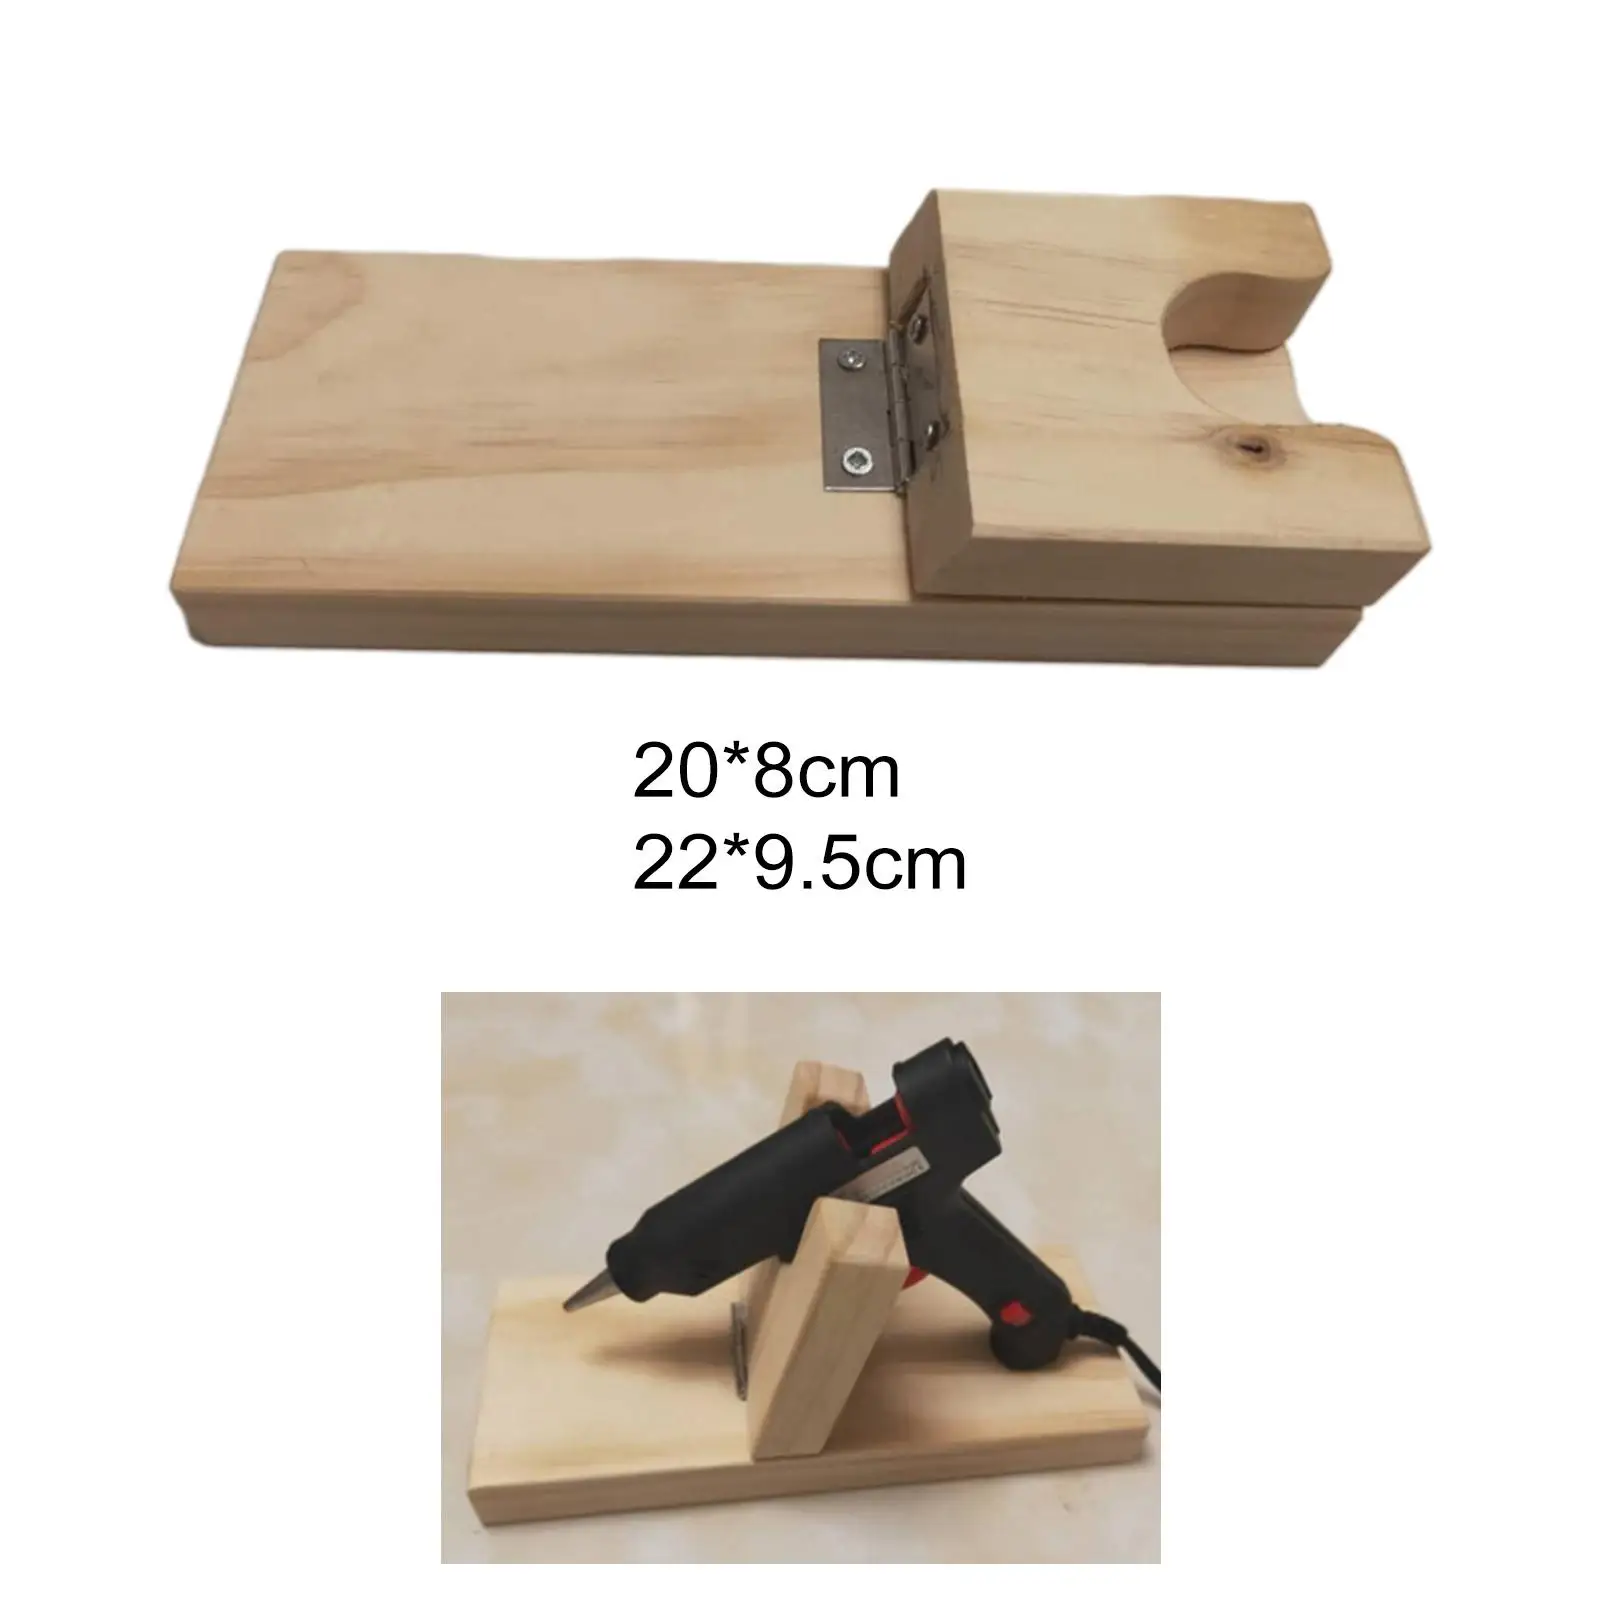 Wood Hot Glue Stand Hot Melt Glue Support Stand Tools Storage Holder Bracket